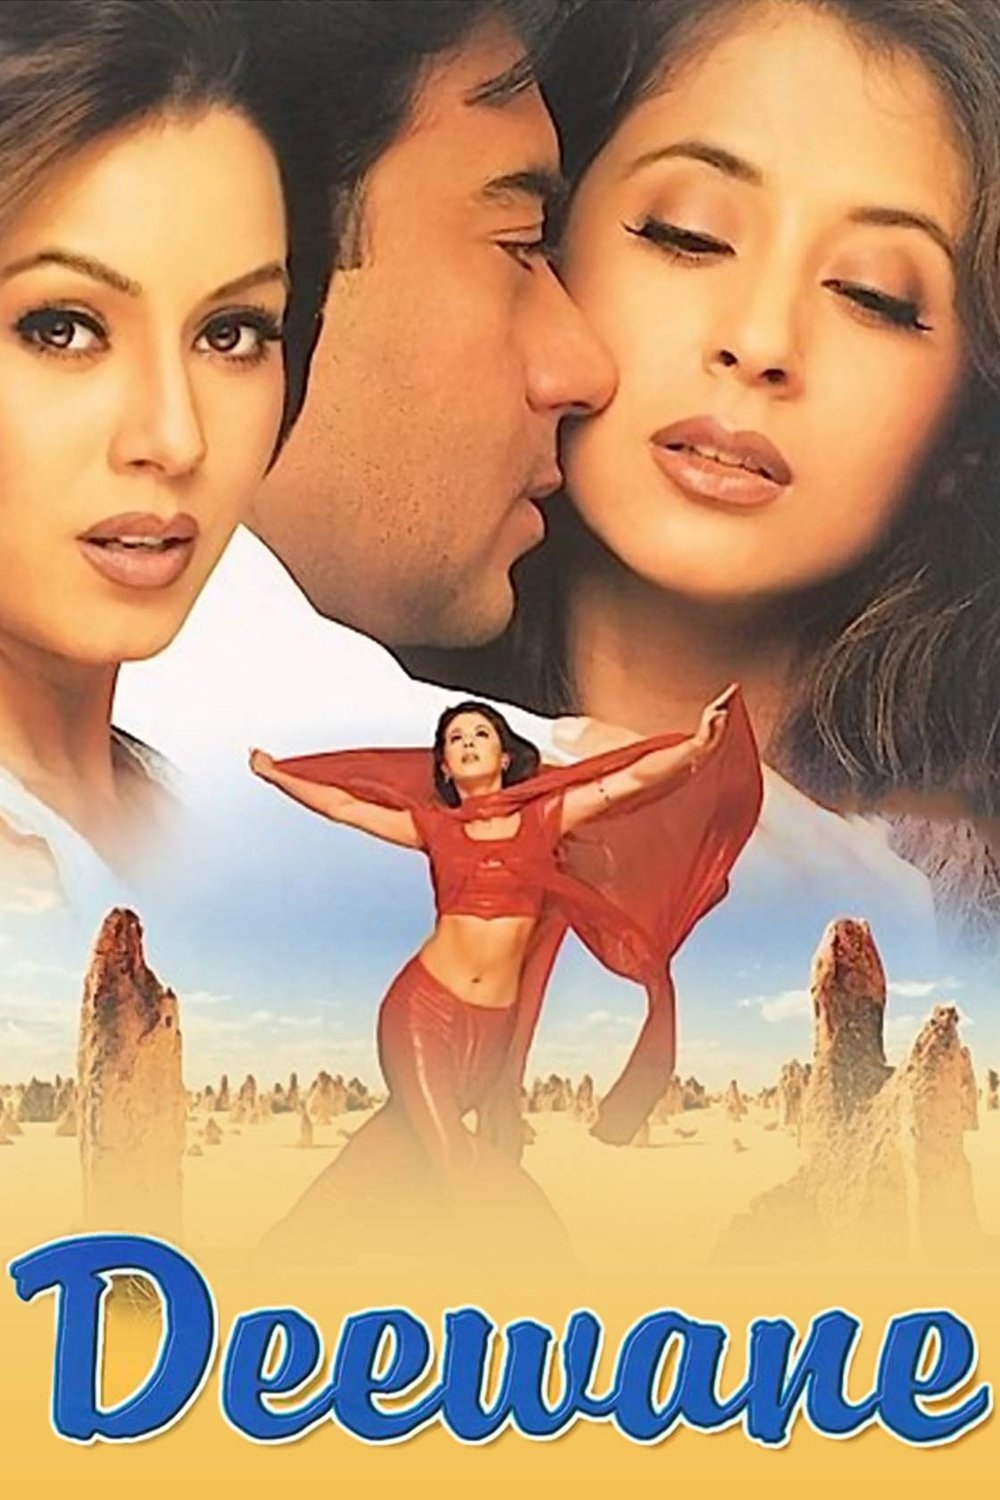 Hindi poster of the movie Deewane